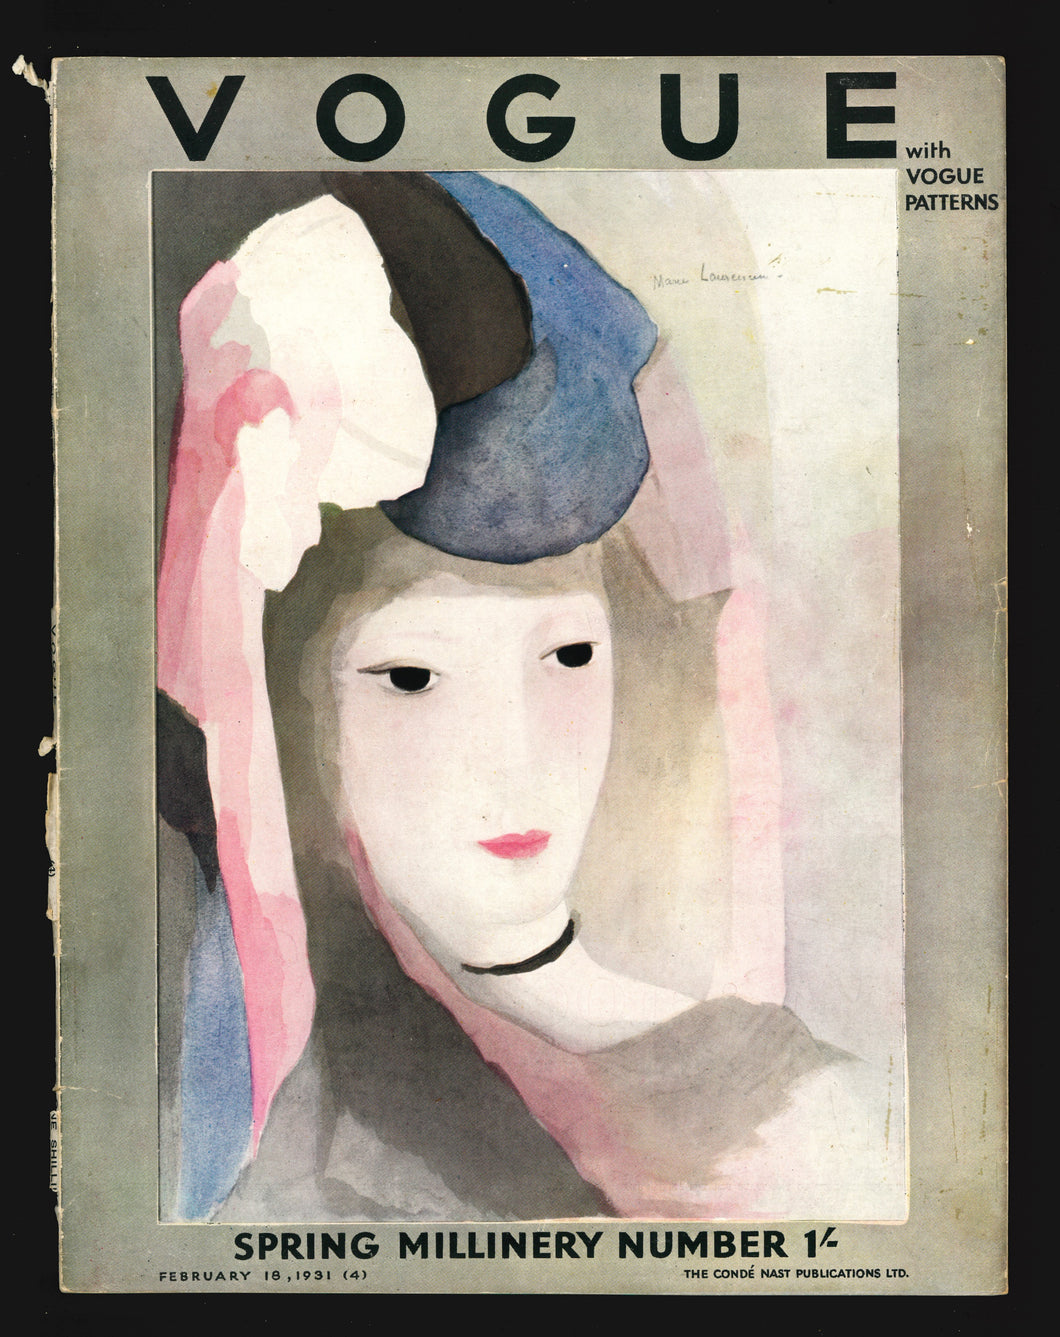 Vogue UK Feb 18 1931